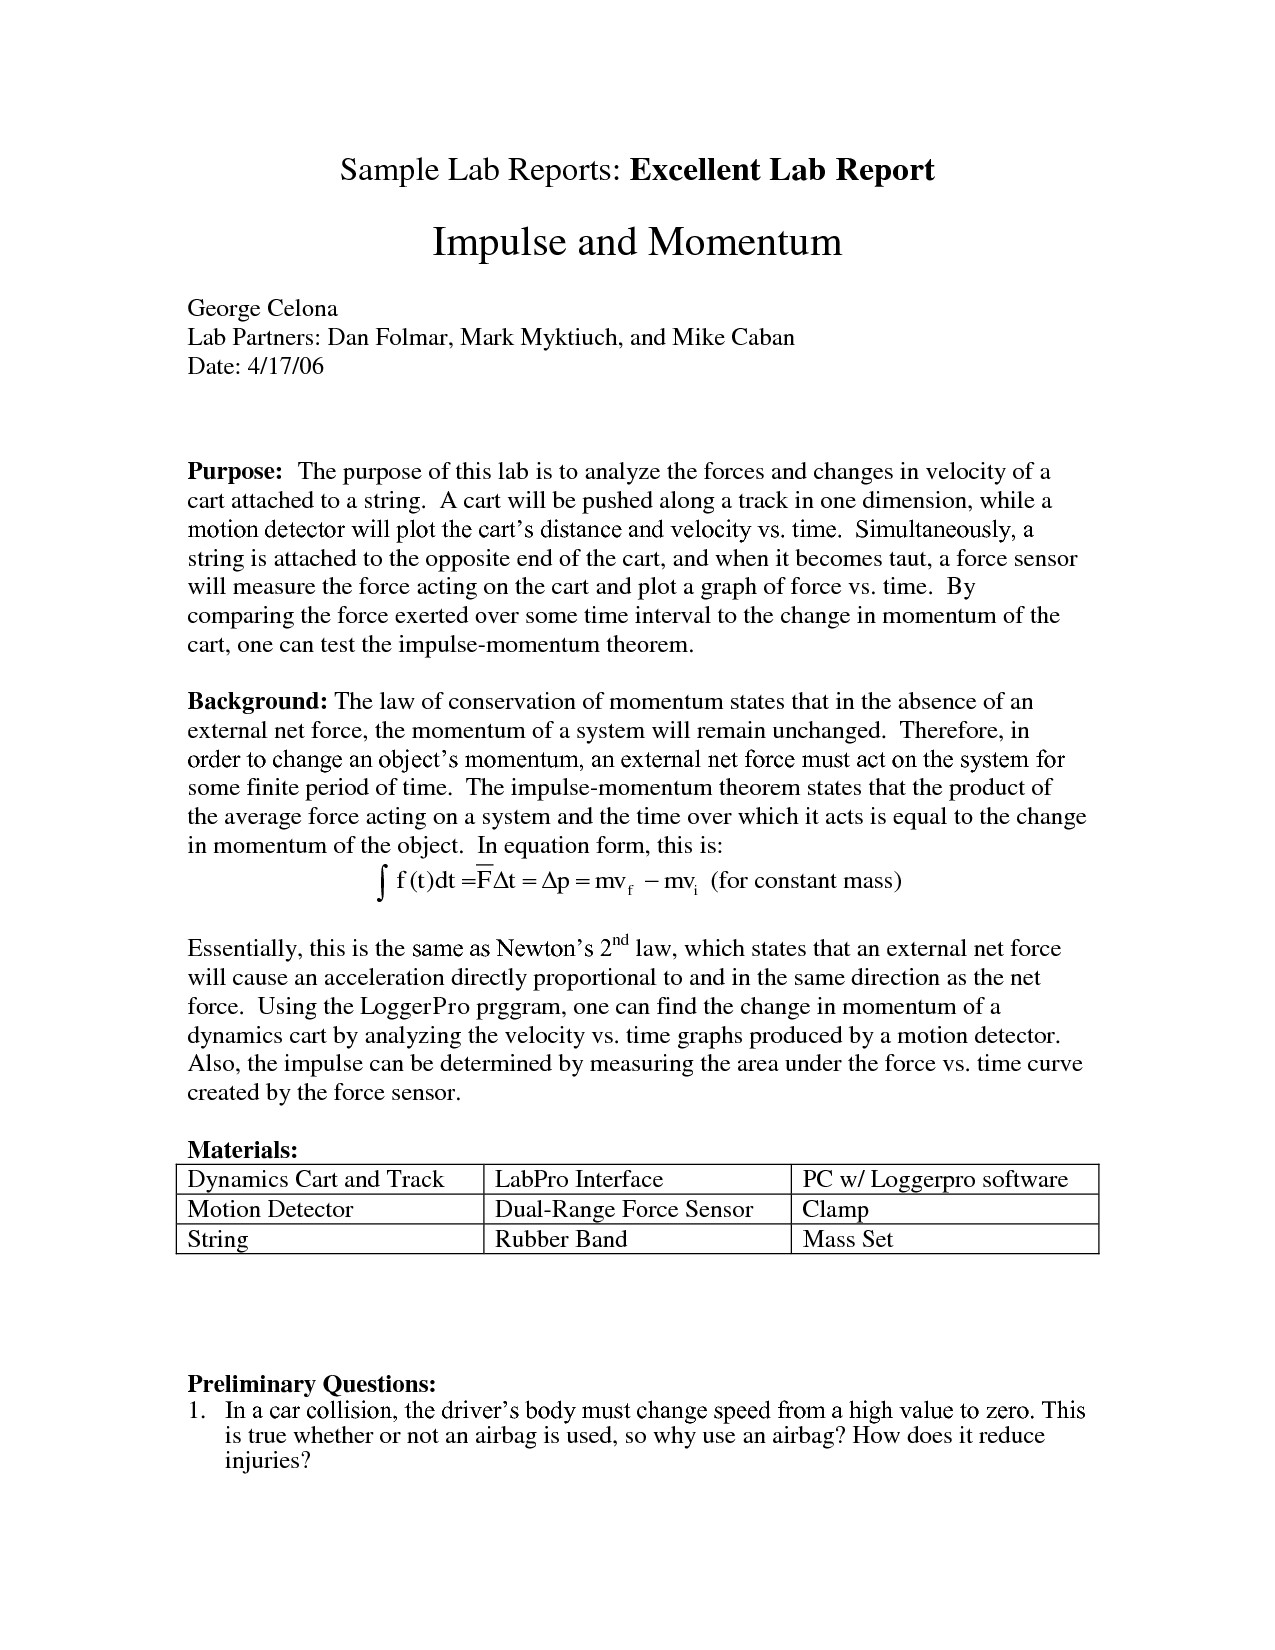 Sample lab report example recent print include – laurelsimpson.com